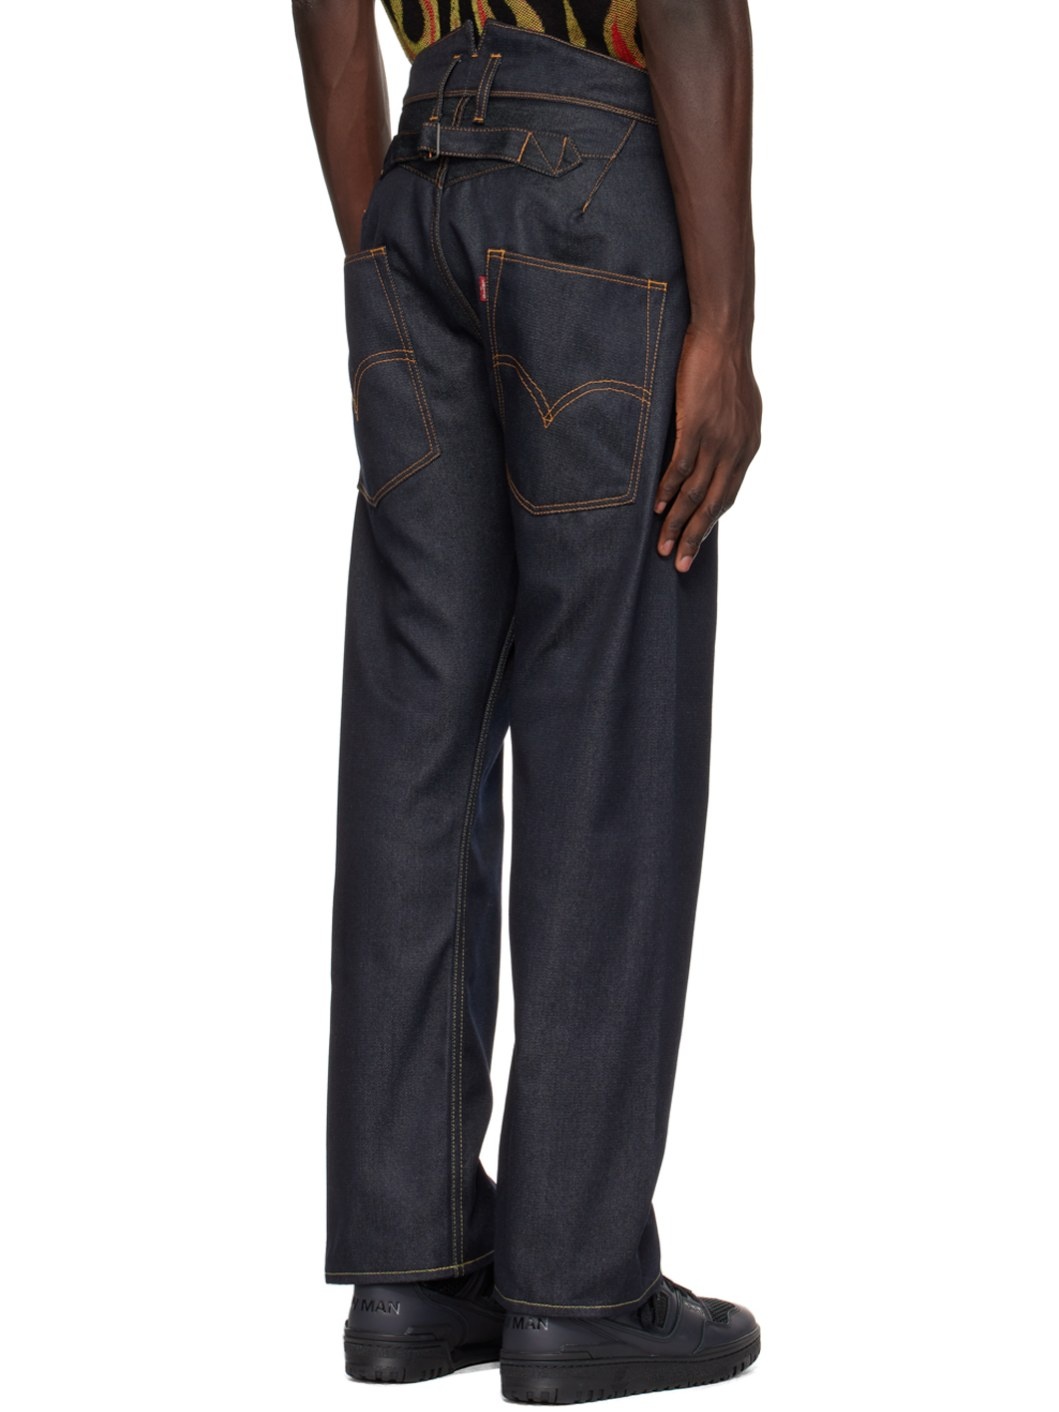 Navy Levi's Edition Jeans - 3